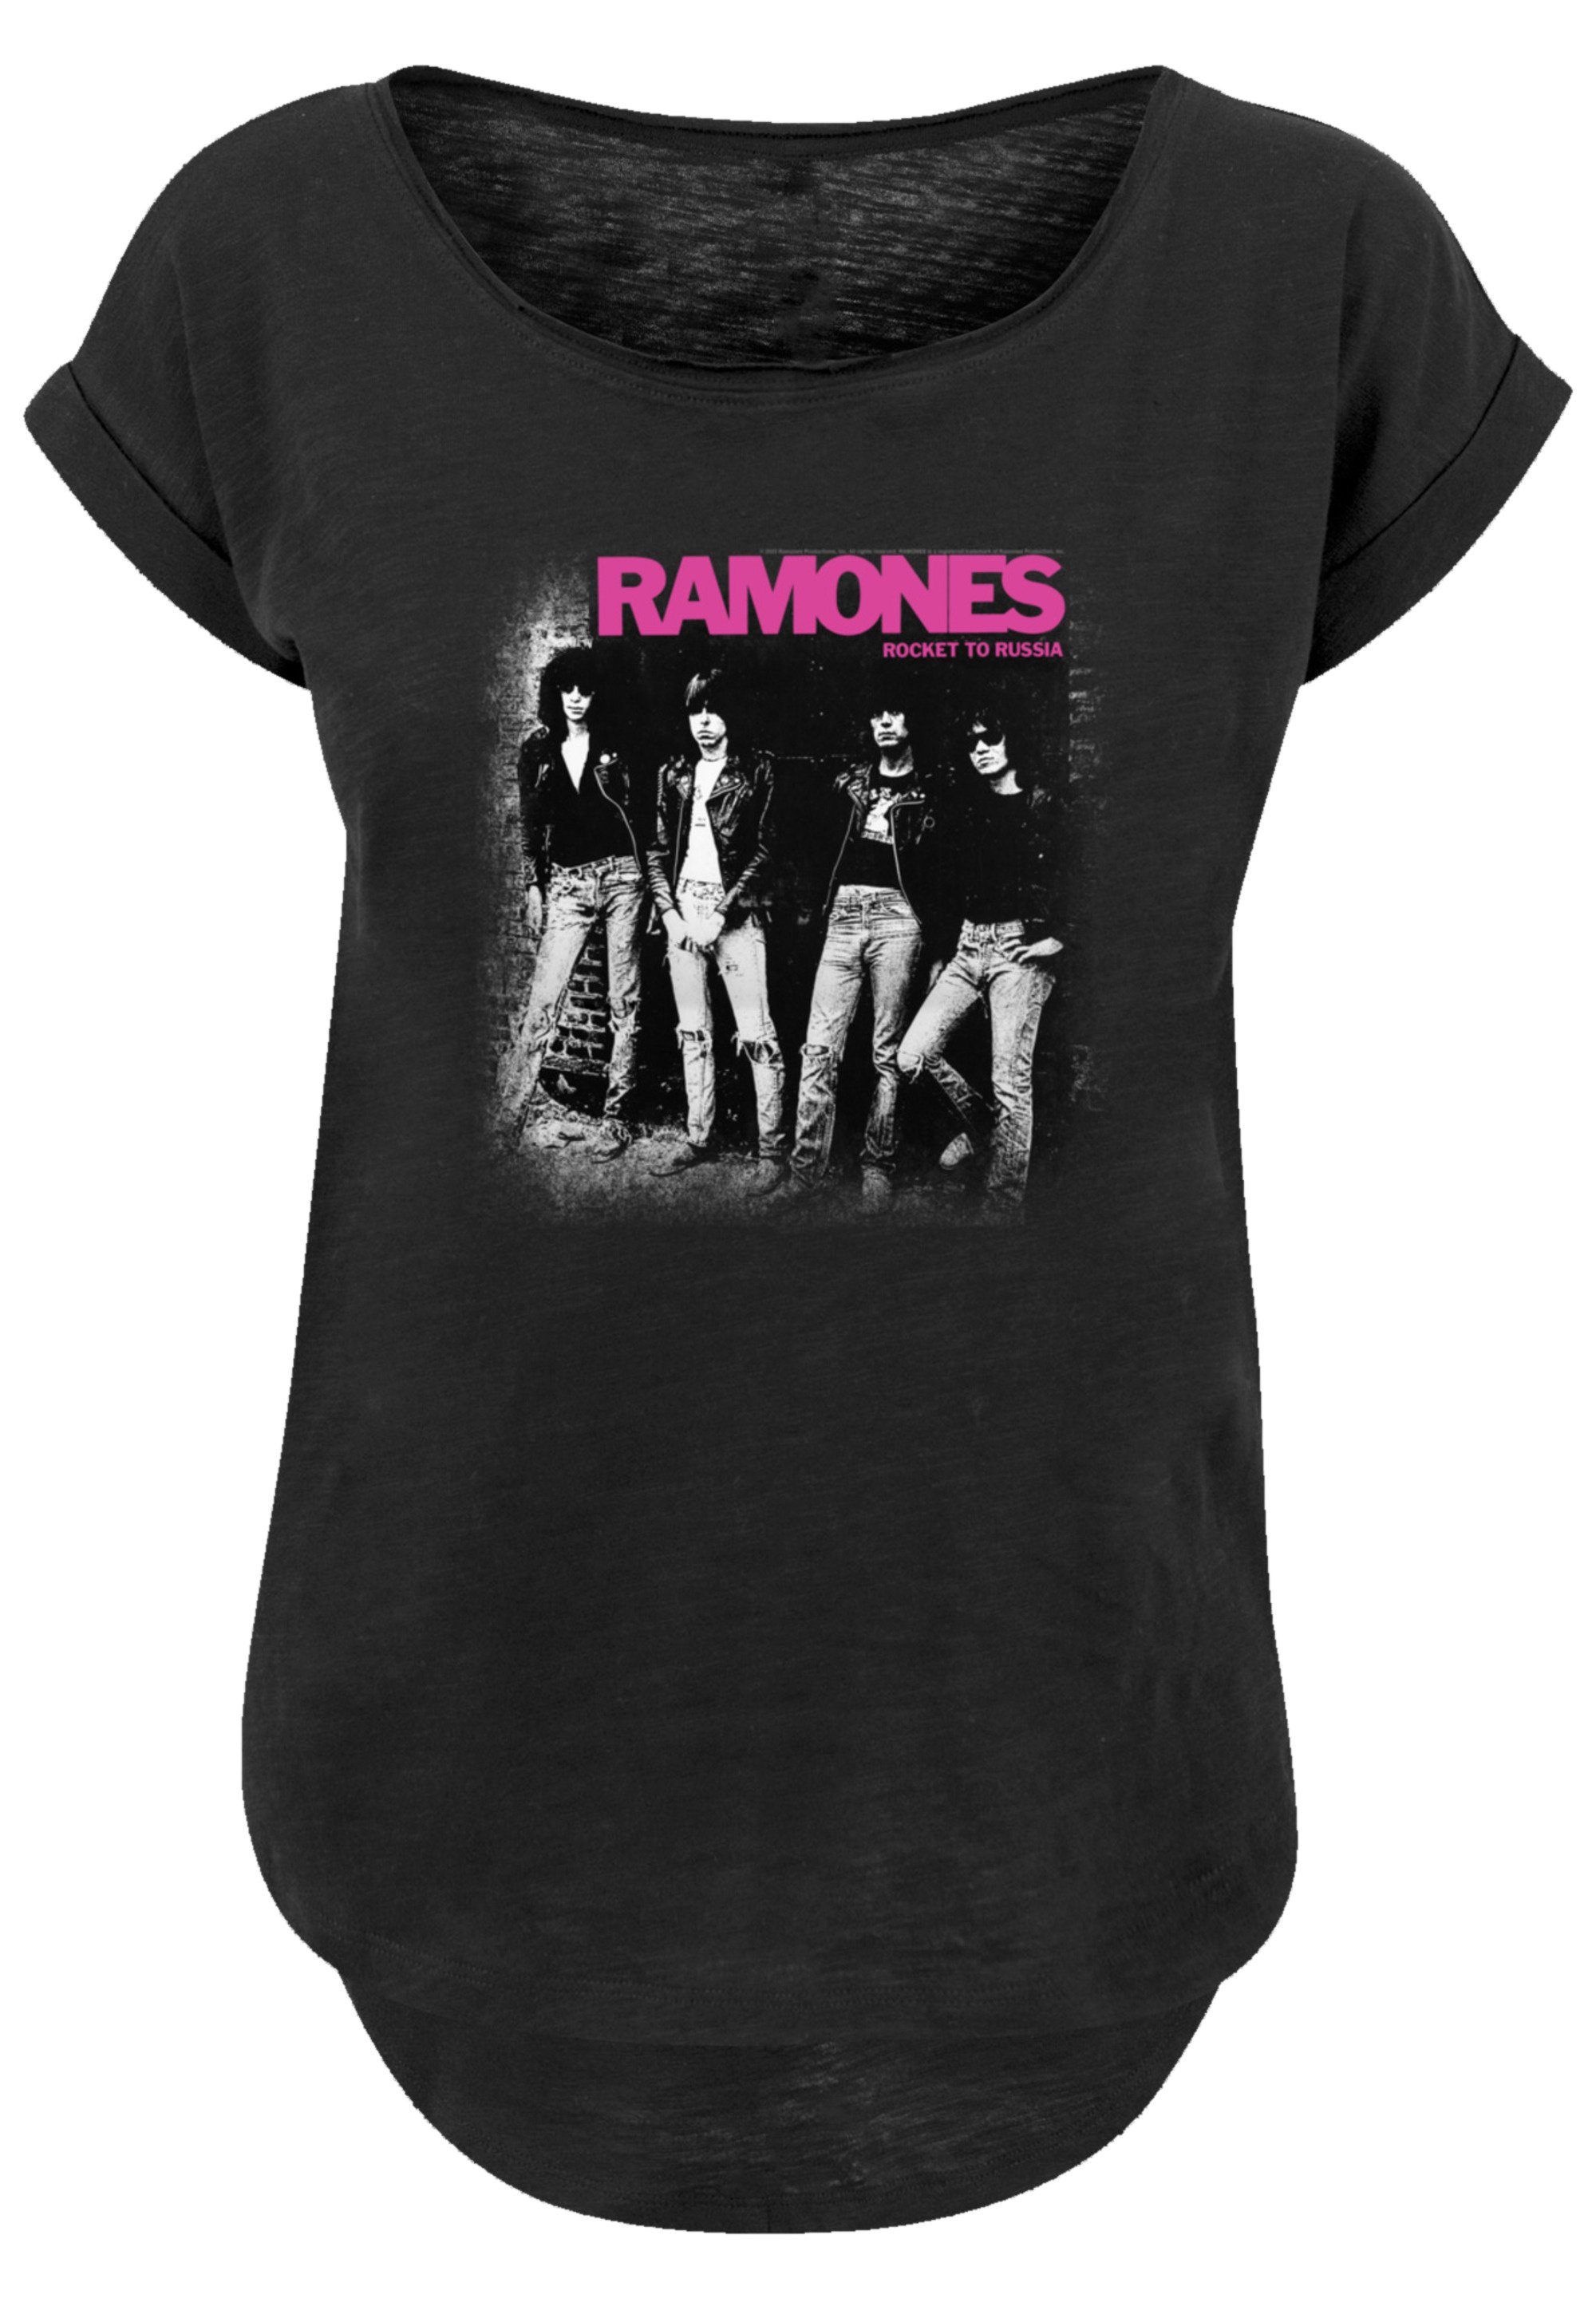 F4NT4STIC T-Shirt Ramones Qualität, Russia Faded Musik Premium Rock-Musik To Band, Band Rocket Rock